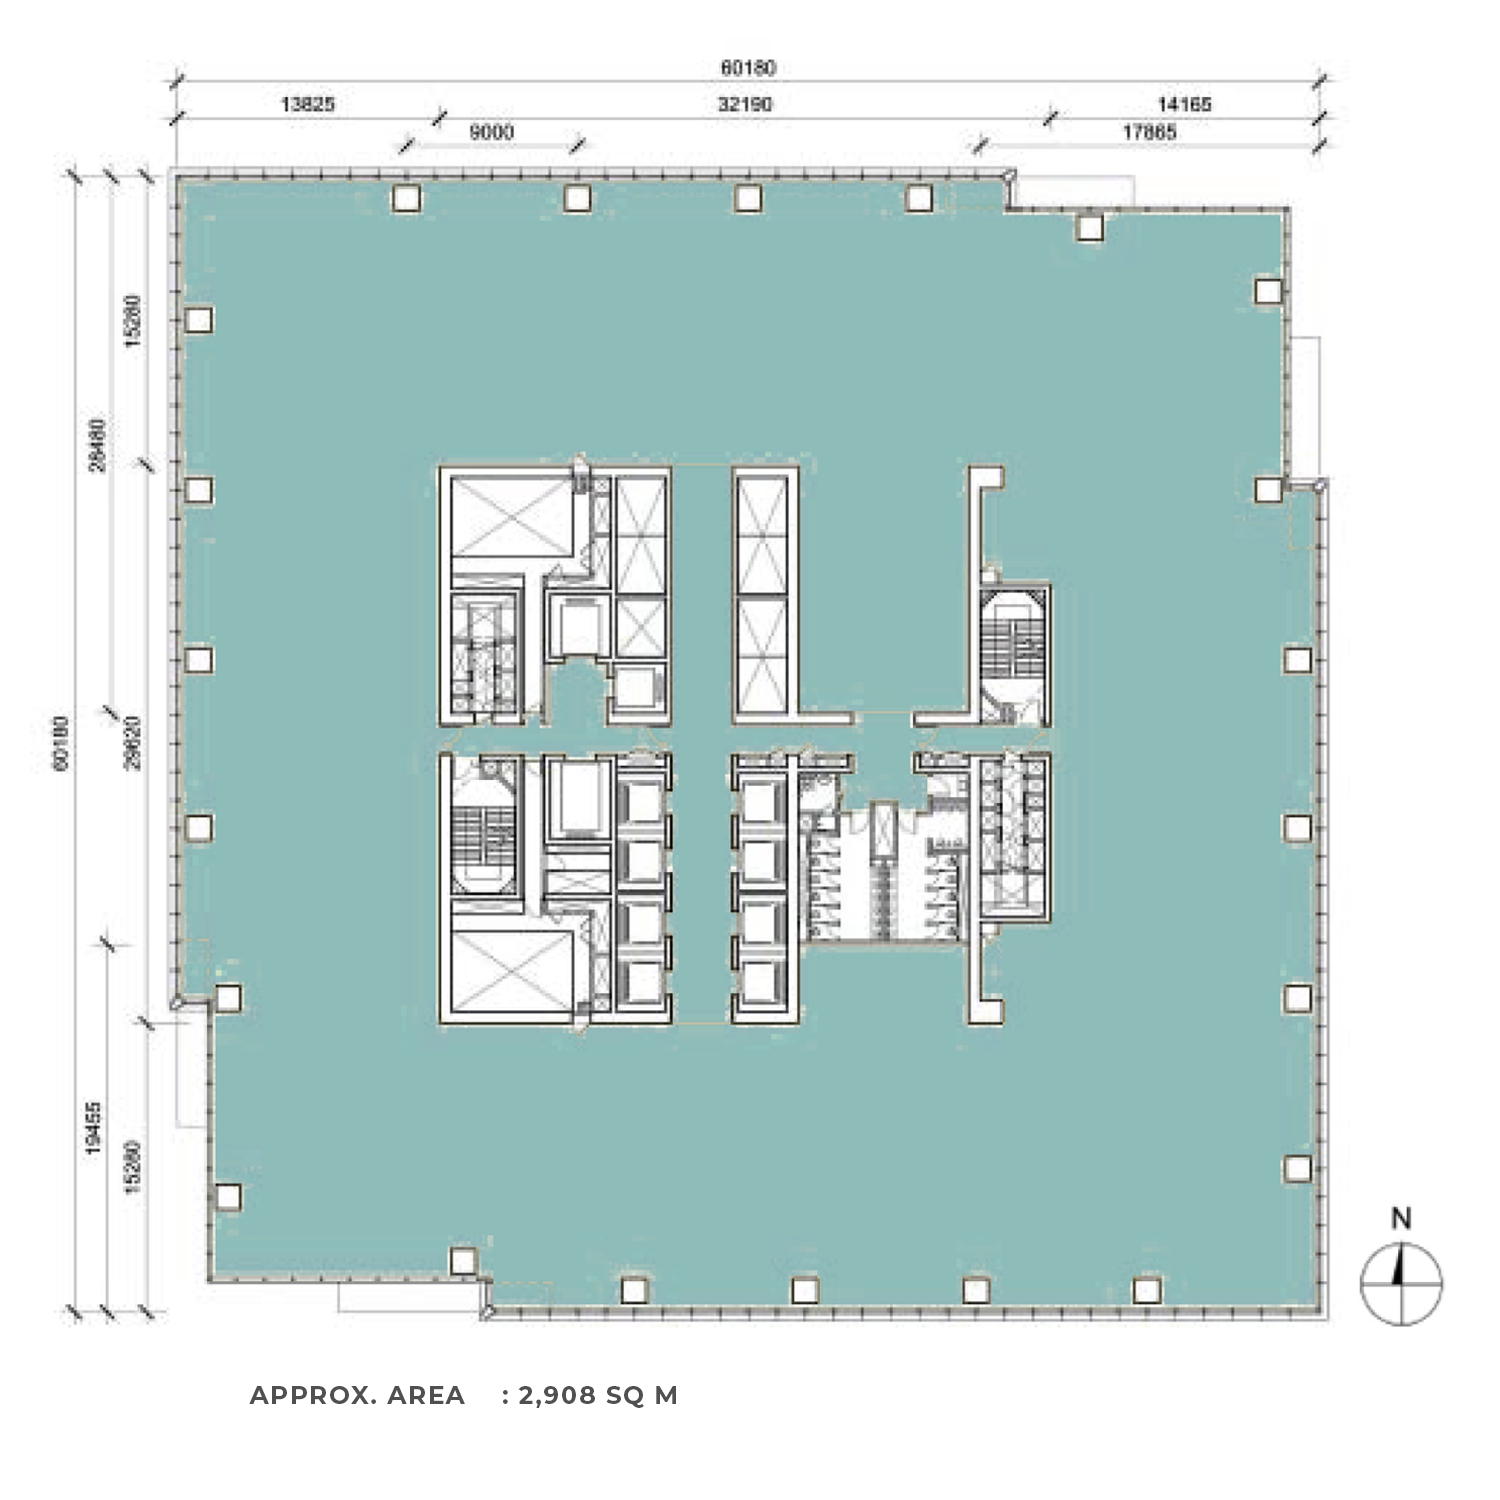 Marina Bay Financial Centre Floor Plan